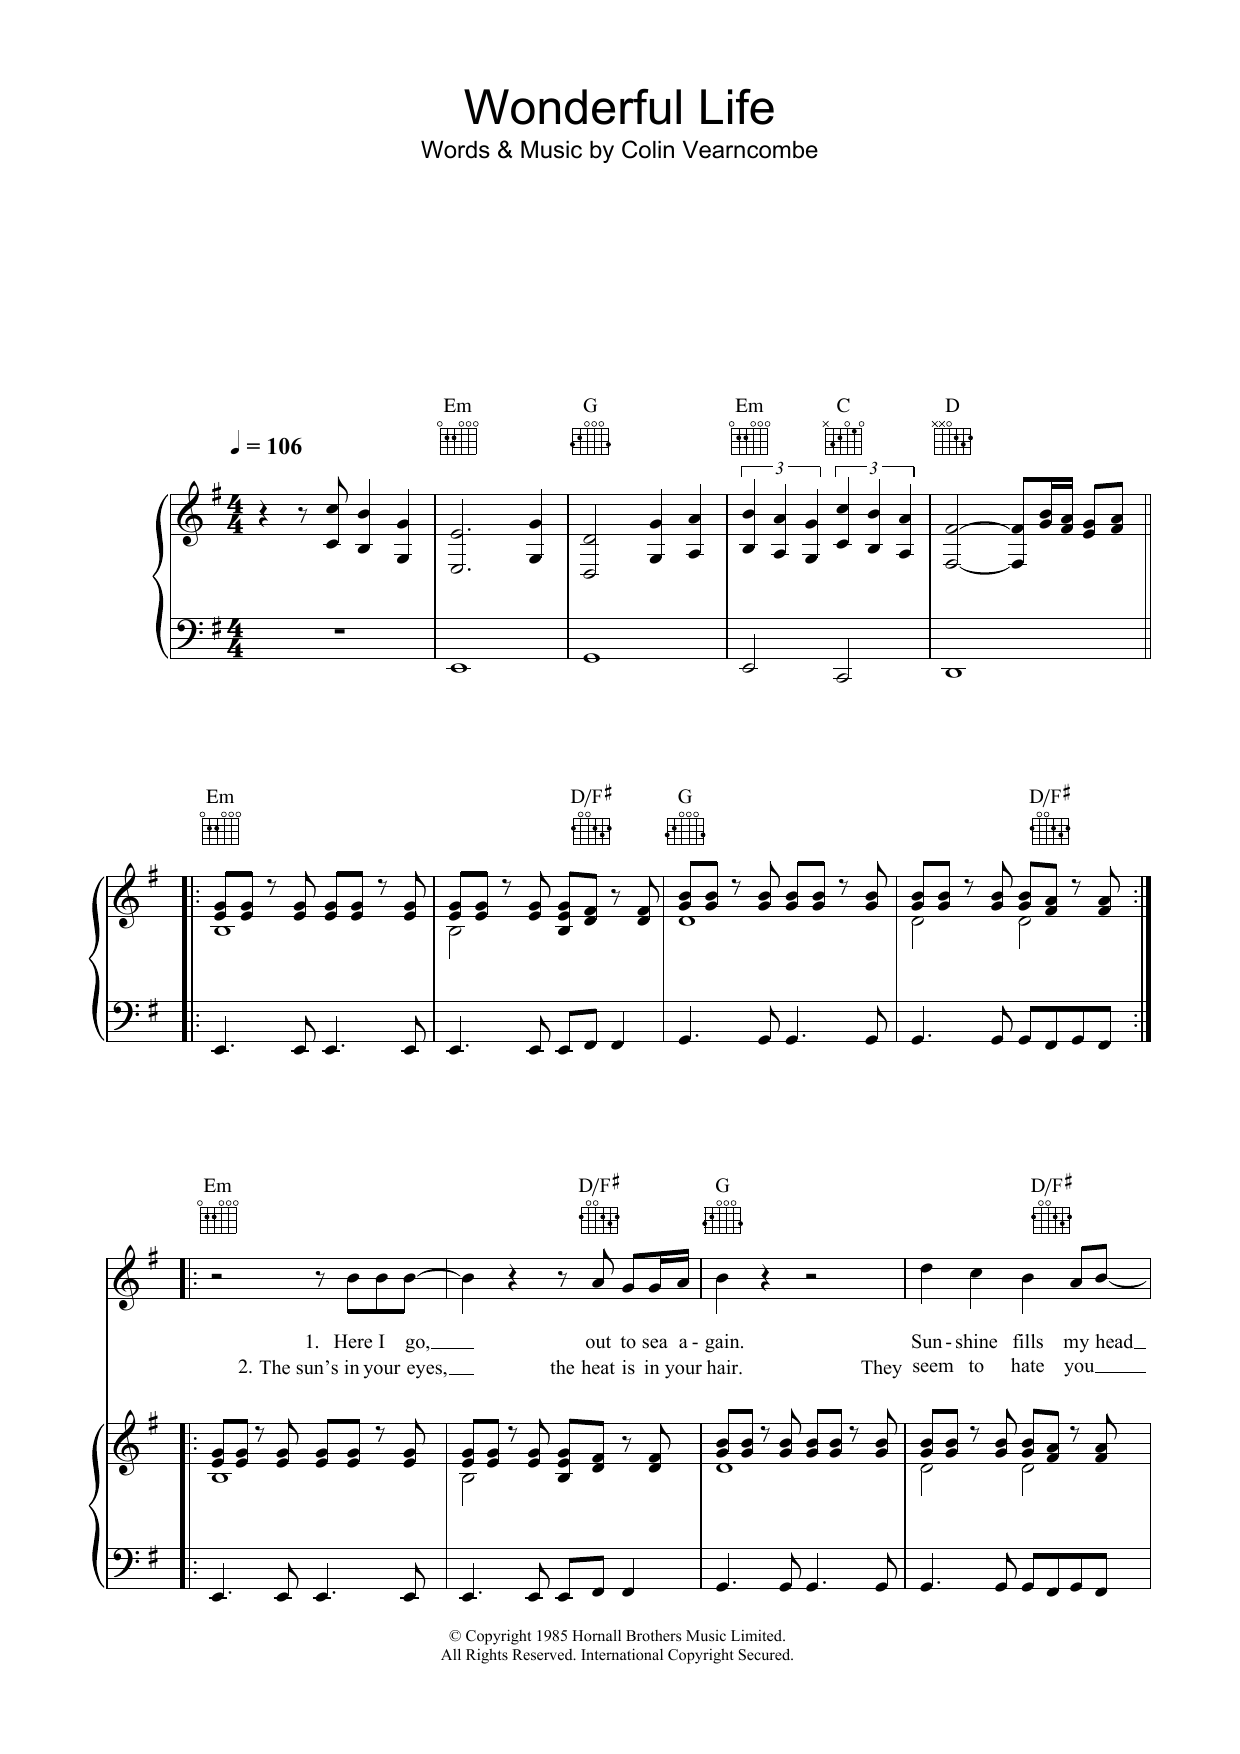 Black Wonderful Life Sheet Music Notes & Chords for Flute - Download or Print PDF